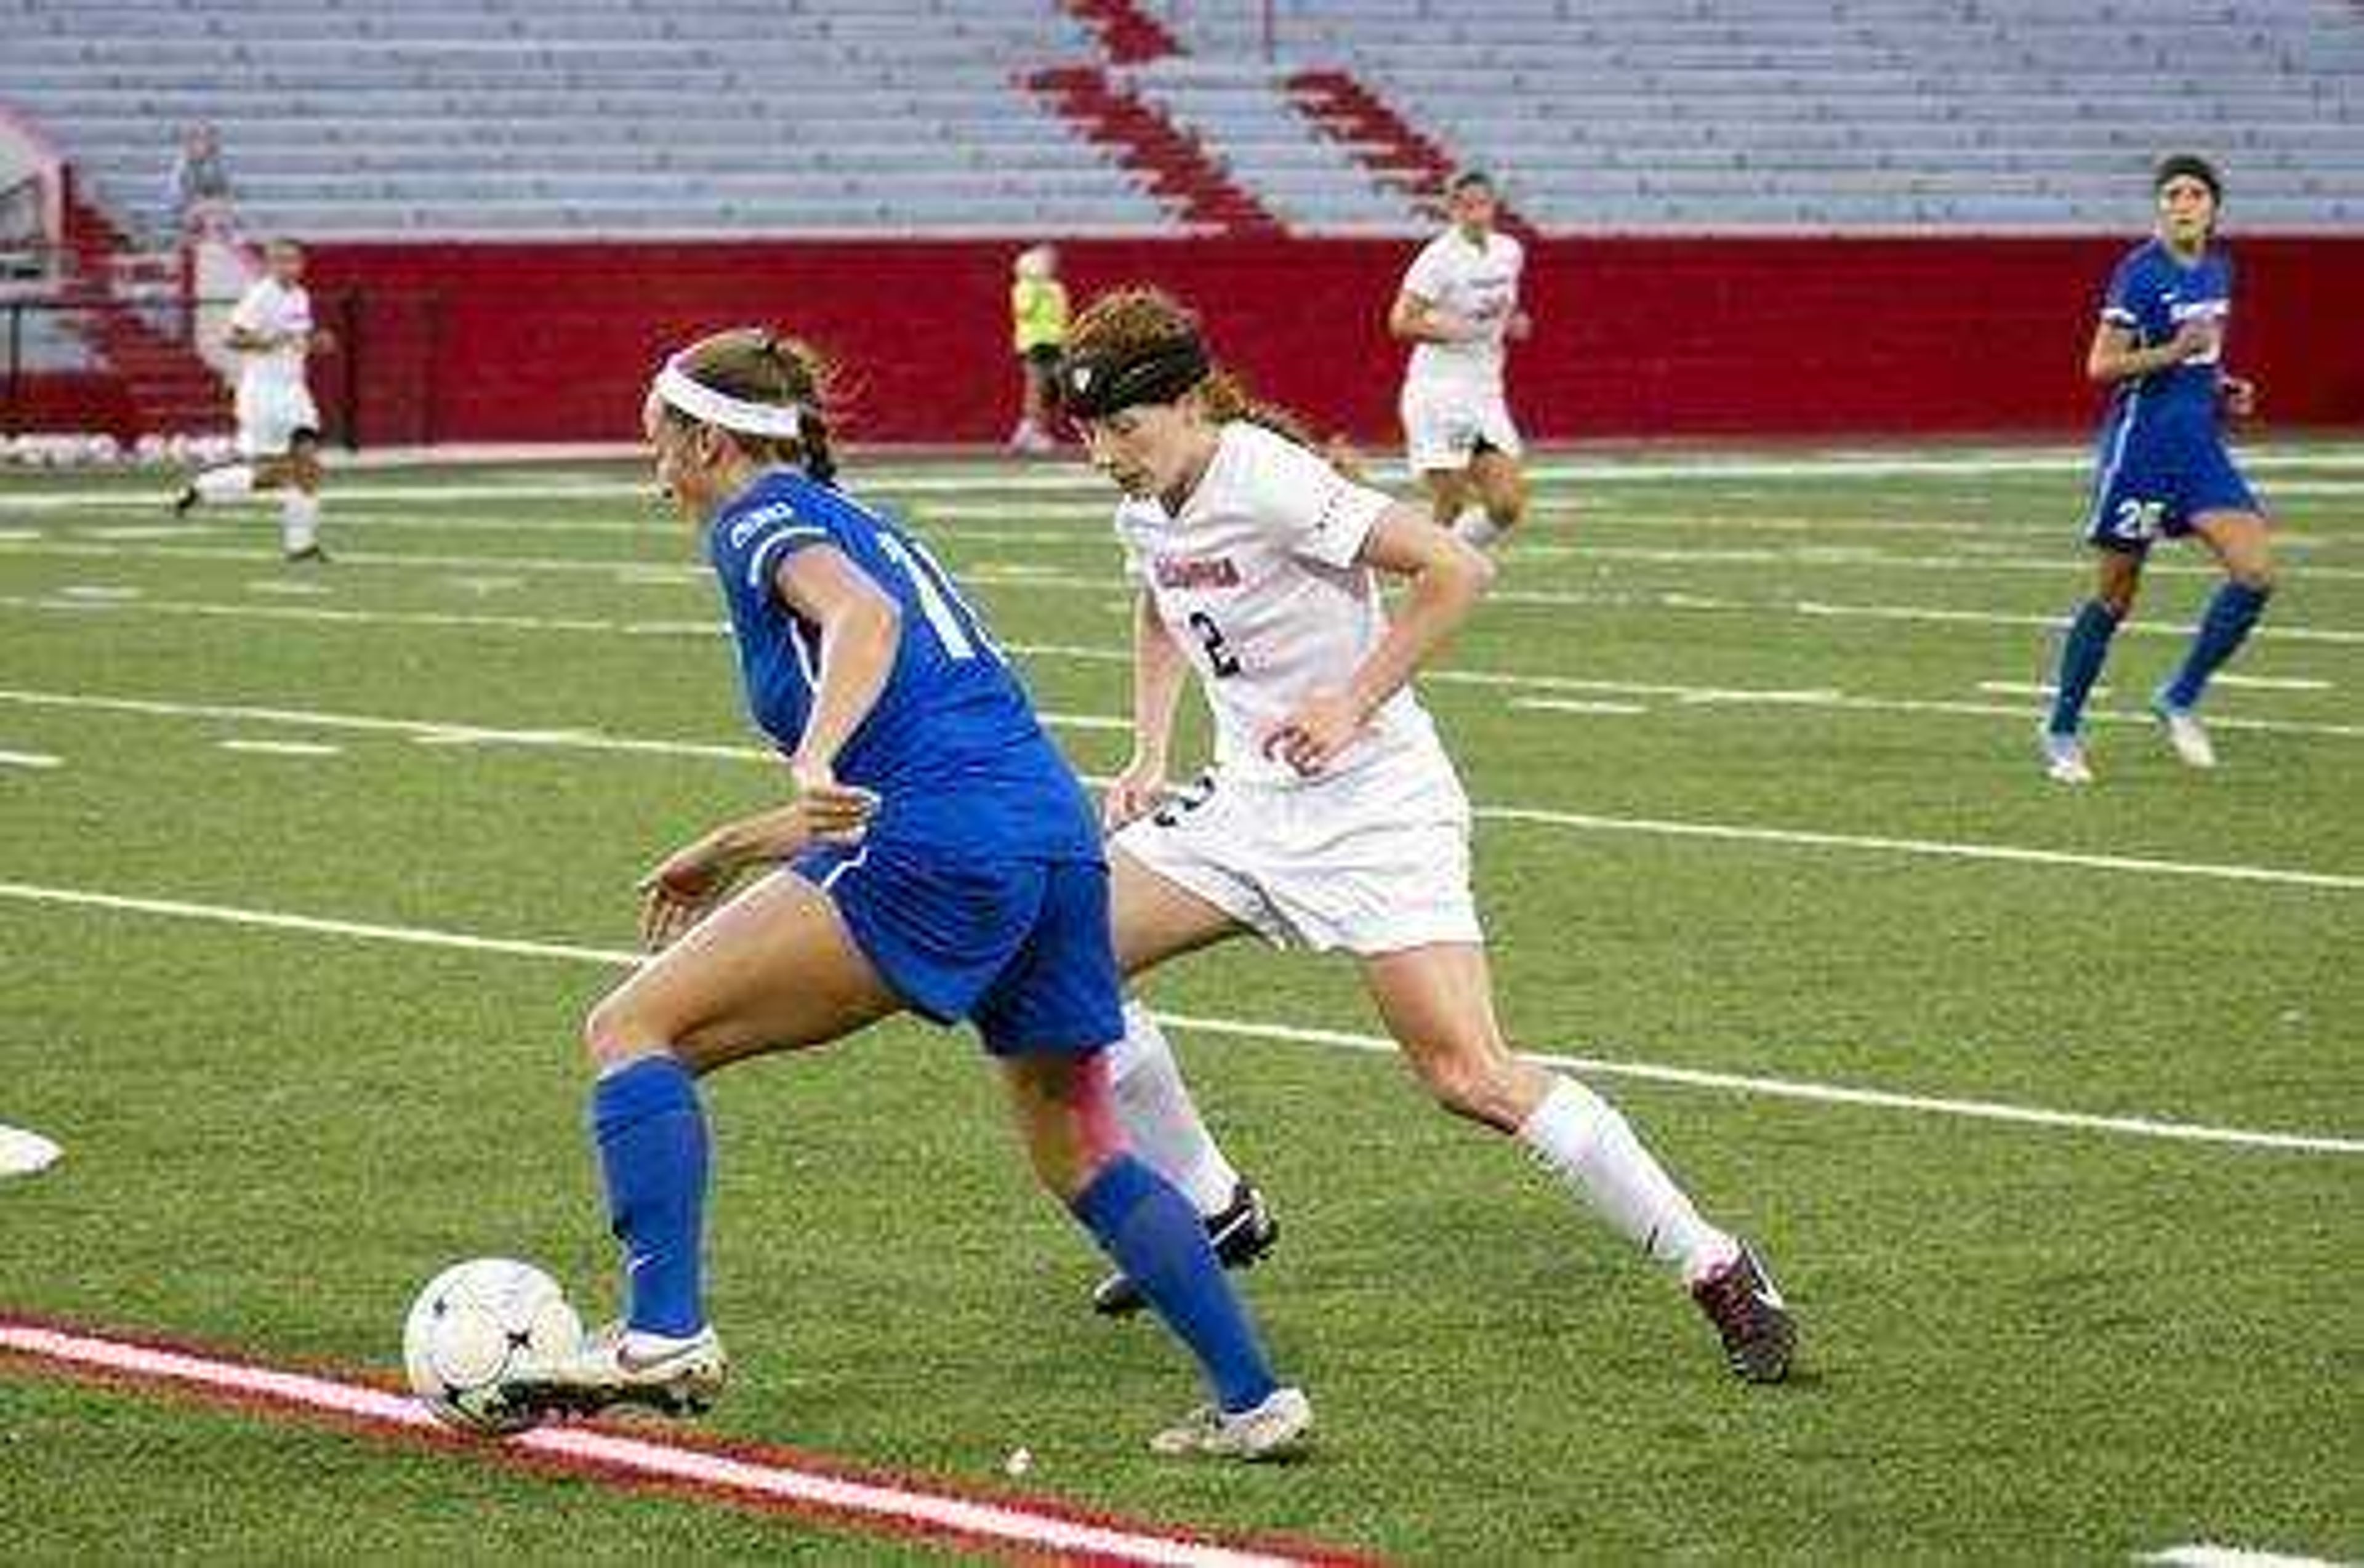 Senior defender Meg Herndon takes on a St. Louis University player during a game on Aug. 19.